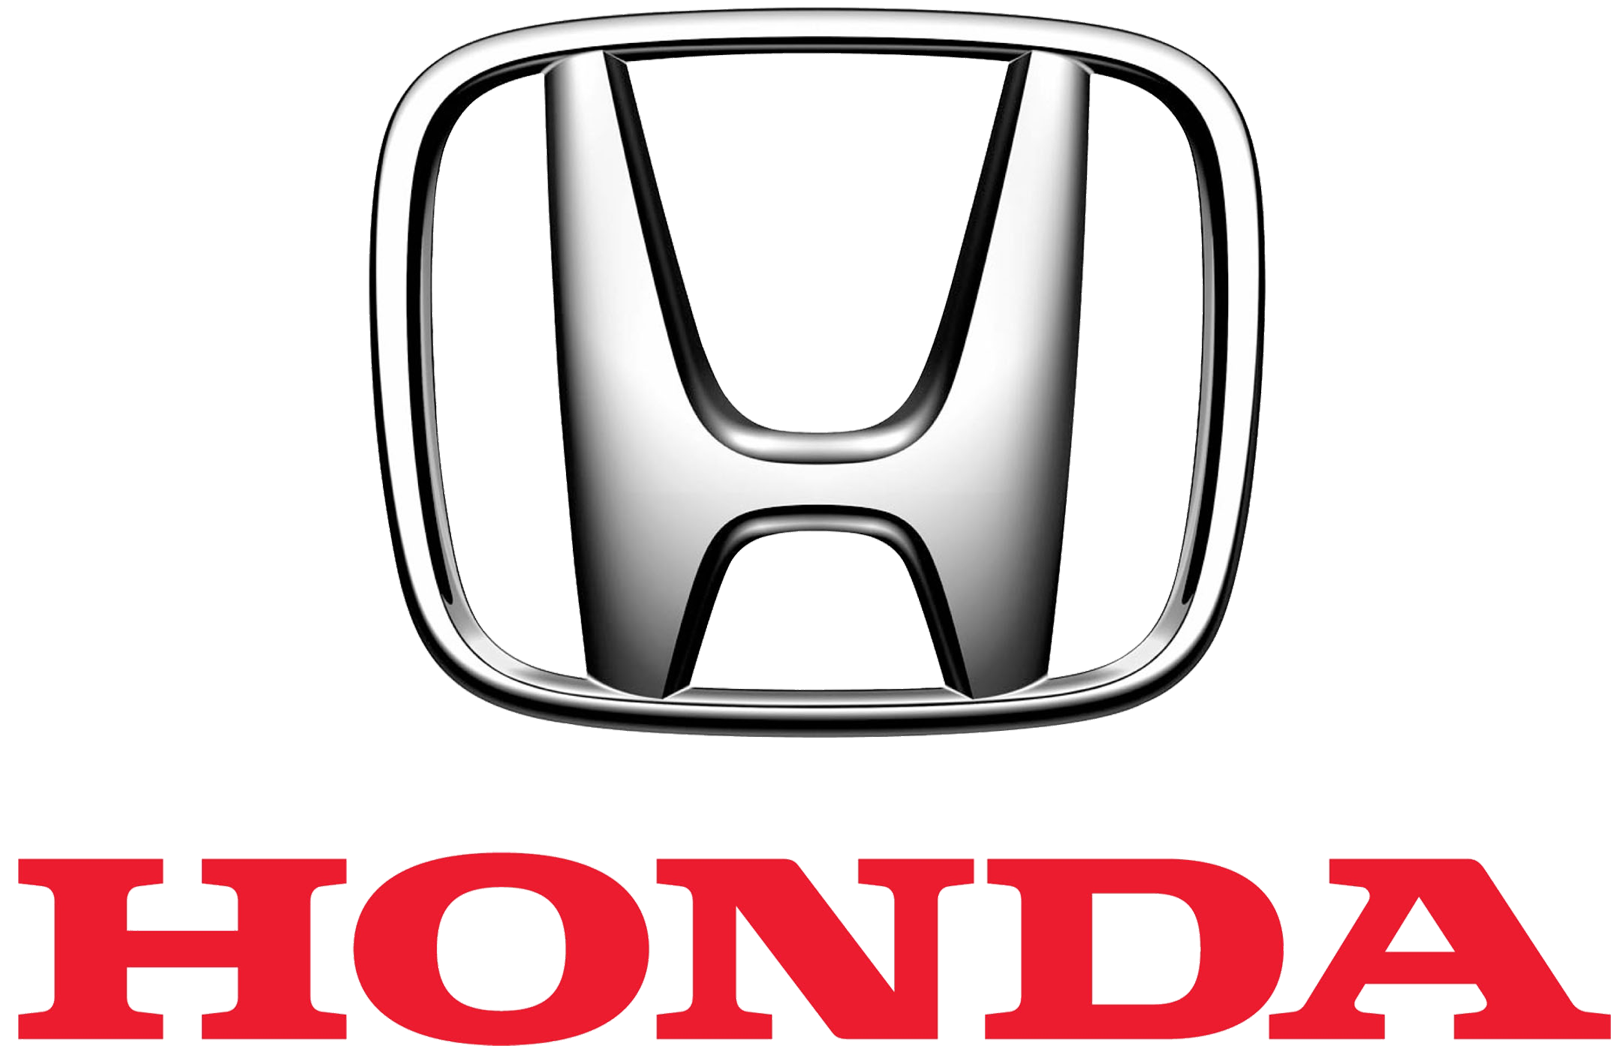 honda-logo-1700x1150-1-e1611075611226